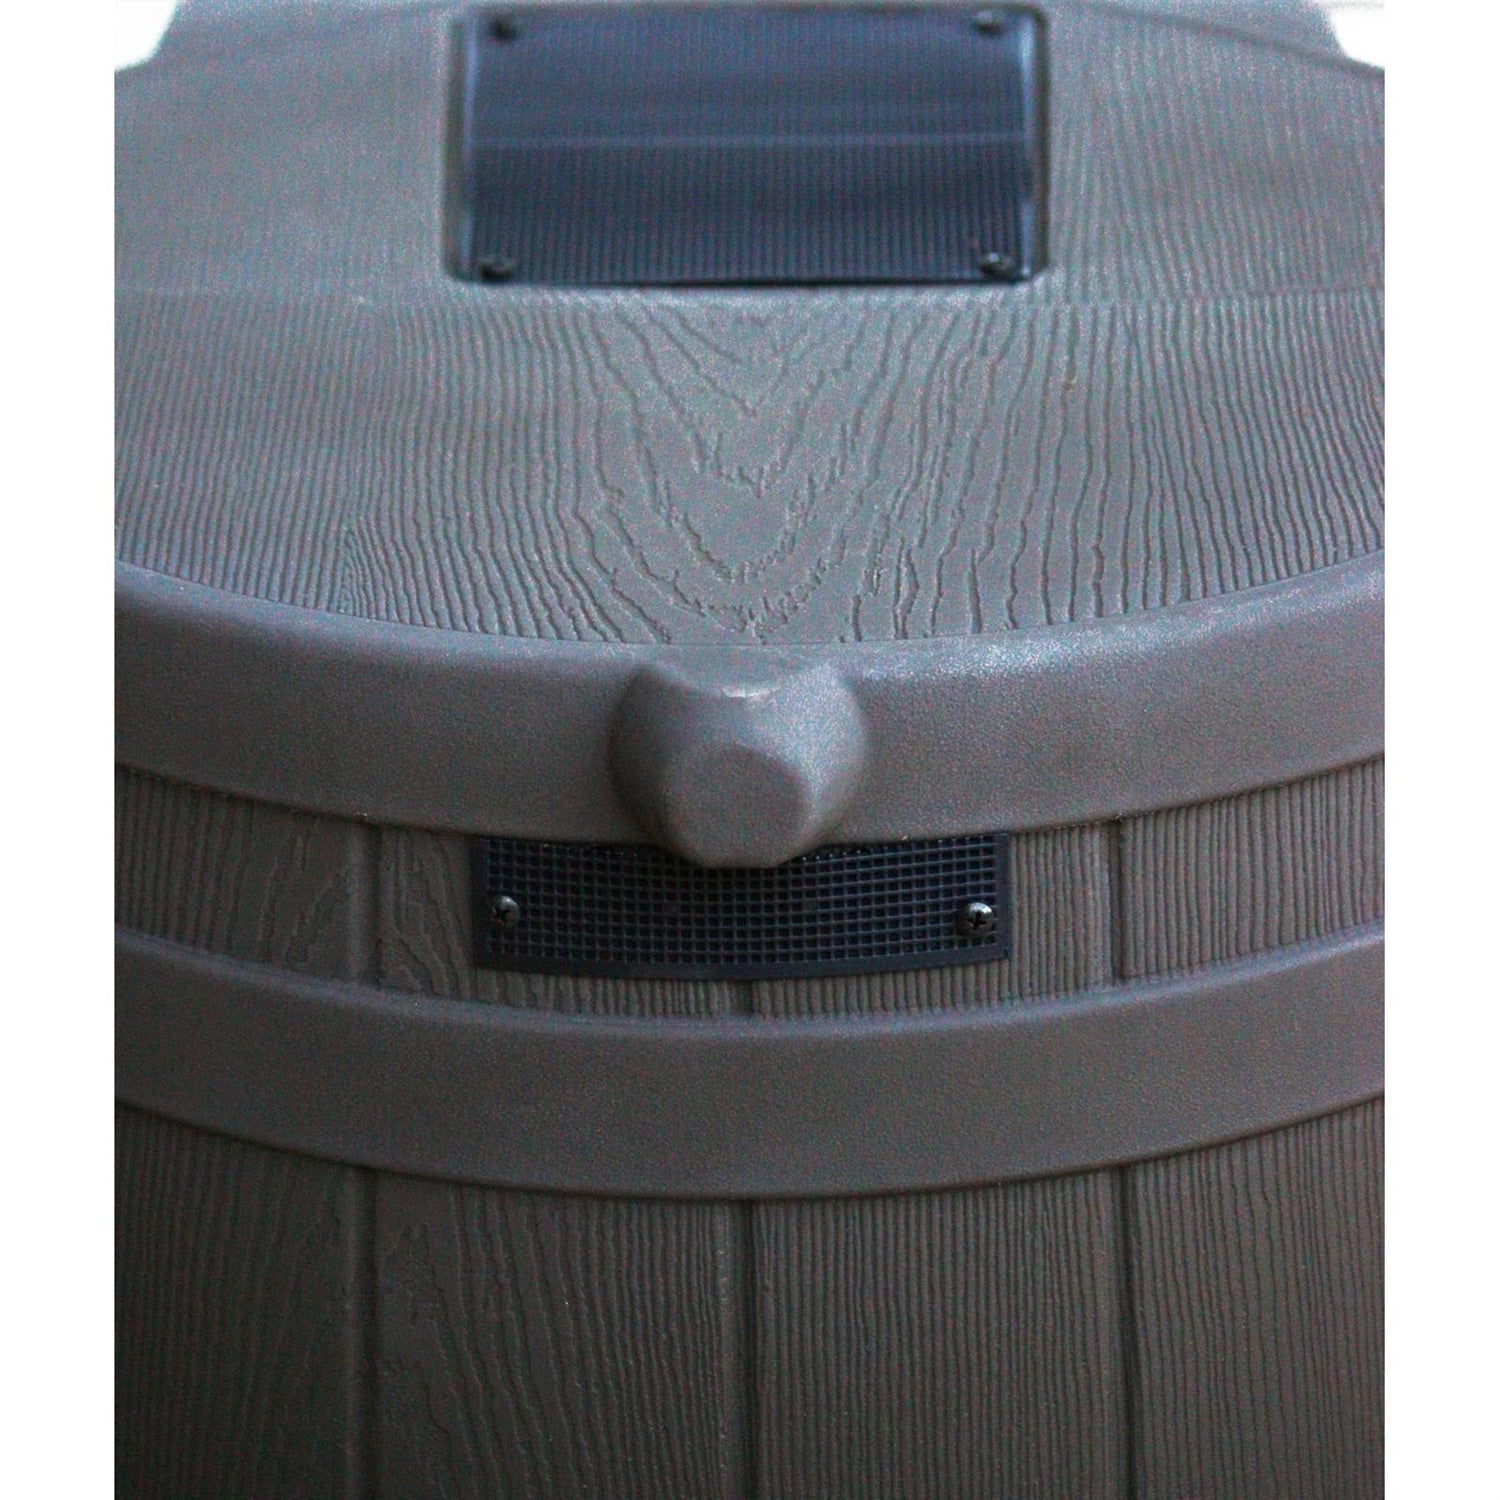 Outdoor > Gardening > Rain Barrels - Brown Oak 50-Gallon Plastic Rain Barrel With Bottom Spigot